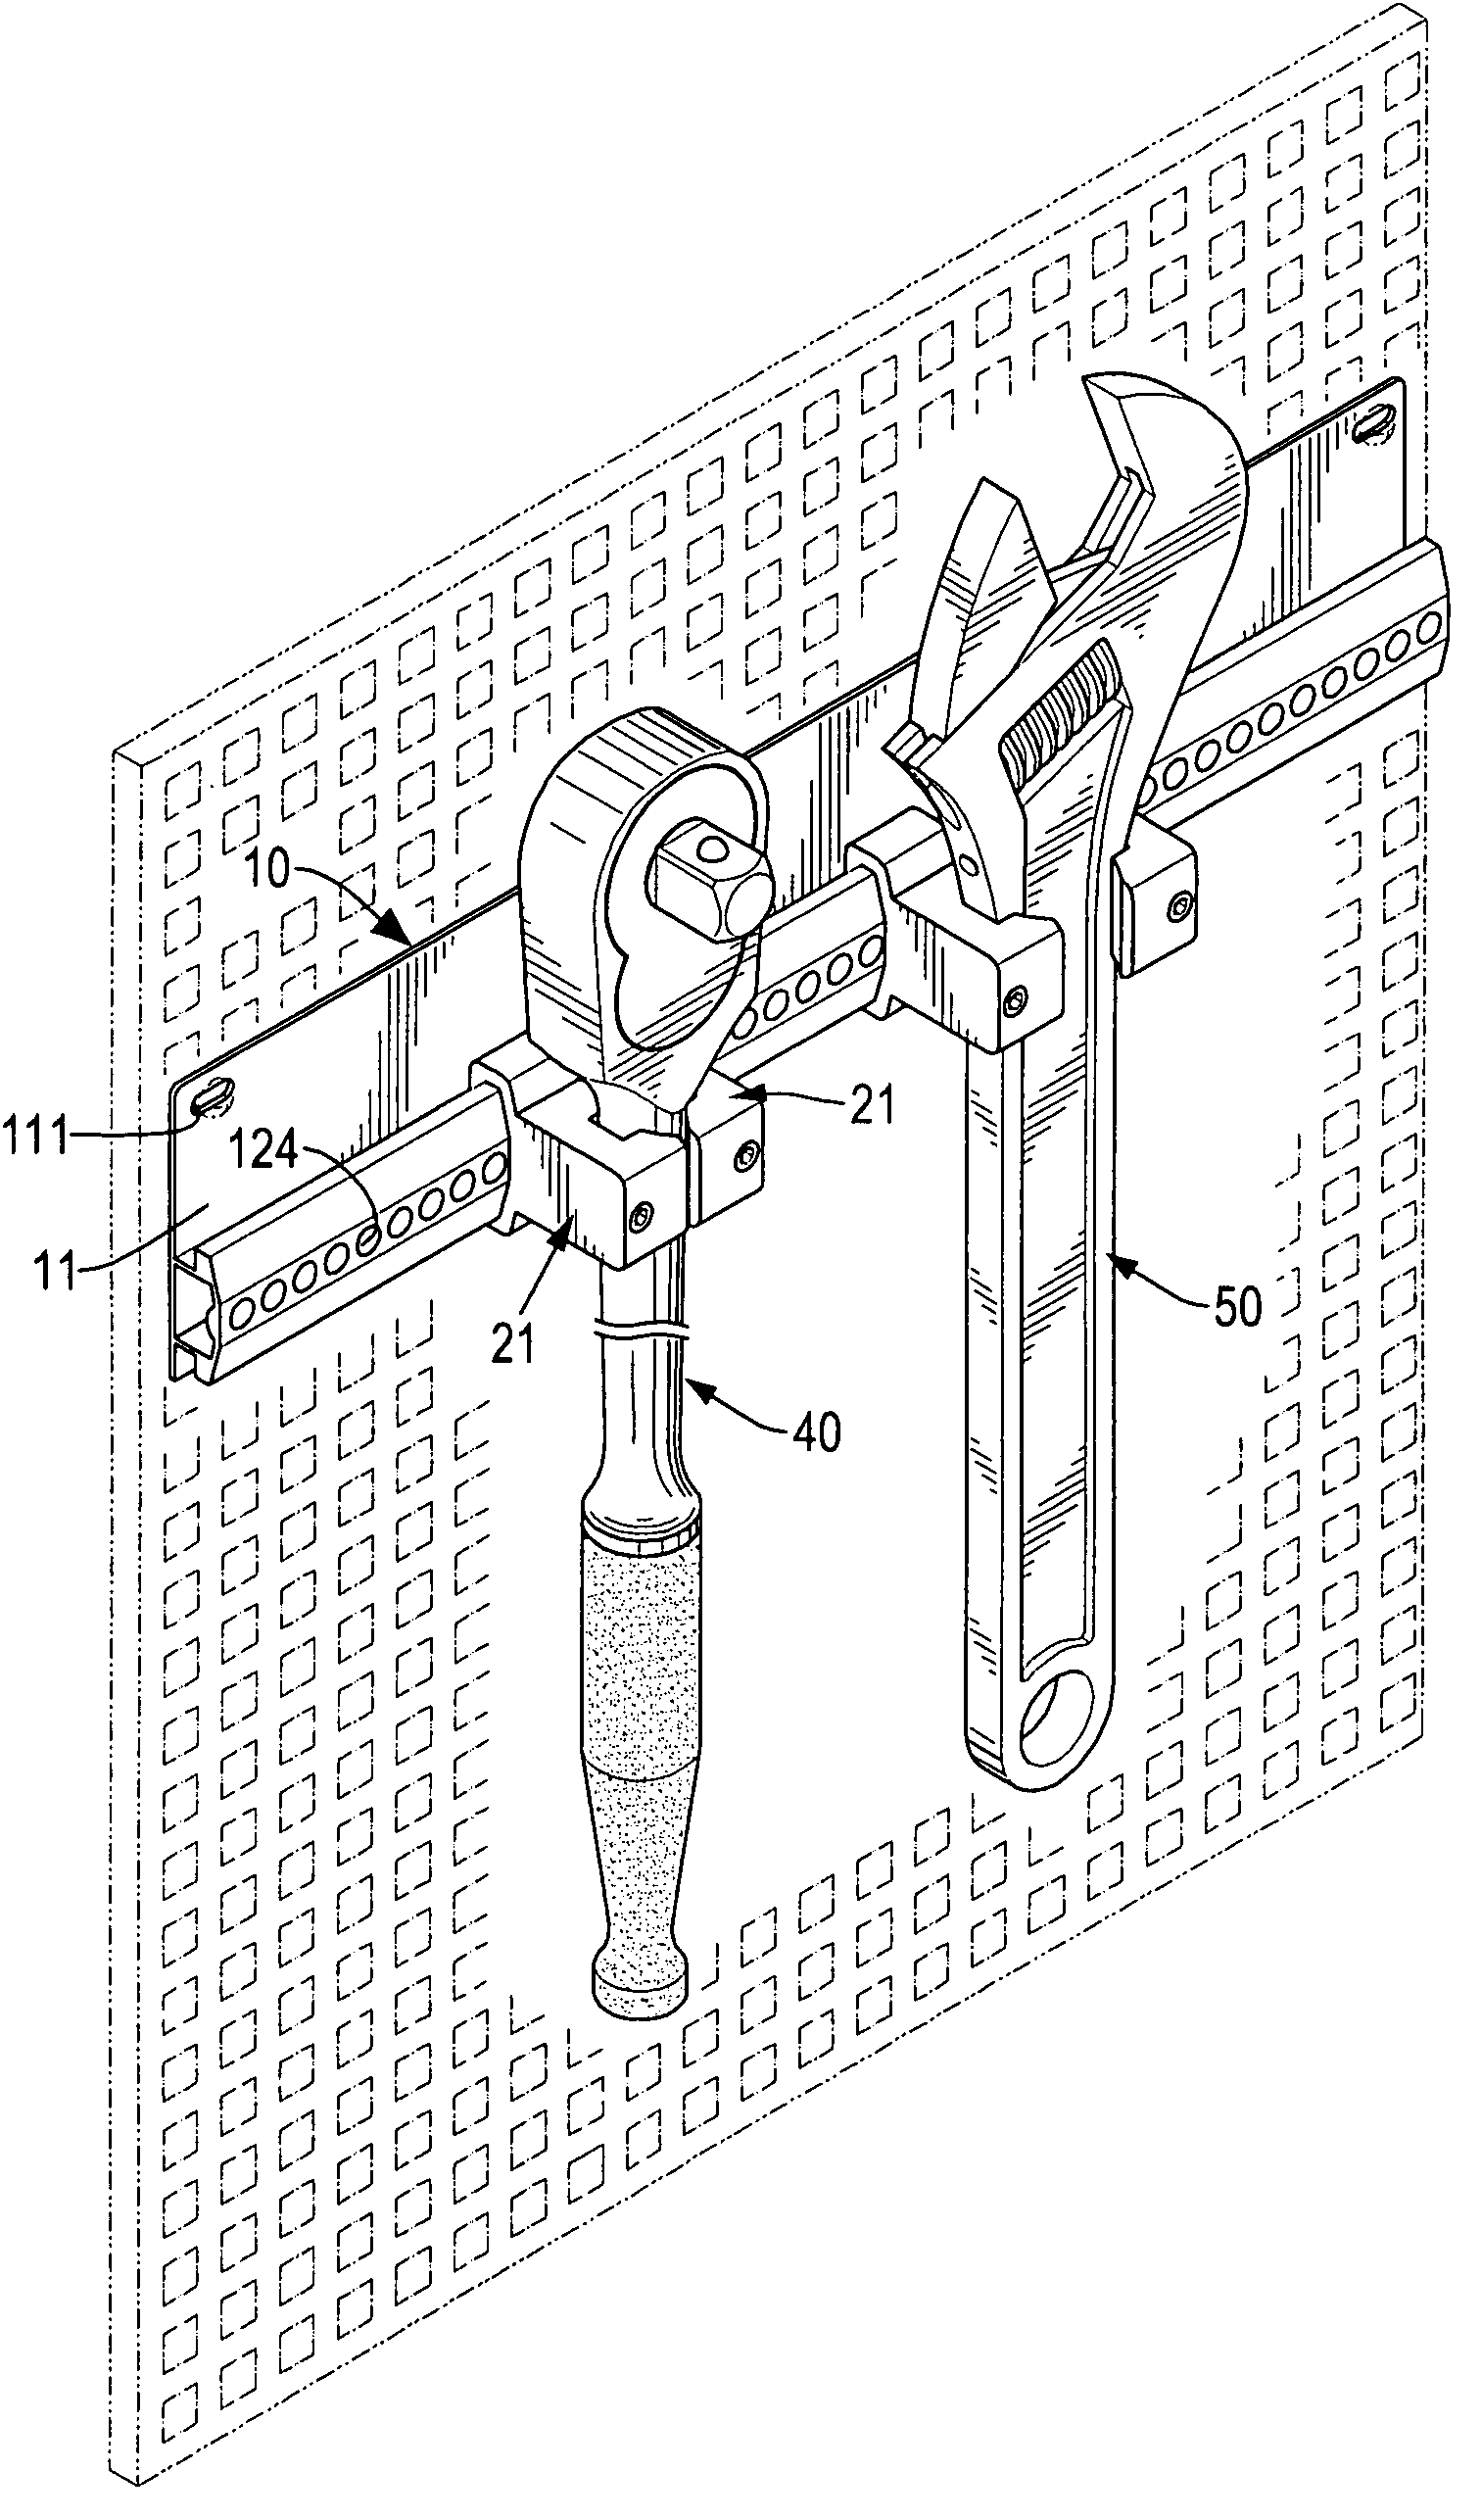 Tool suspension device